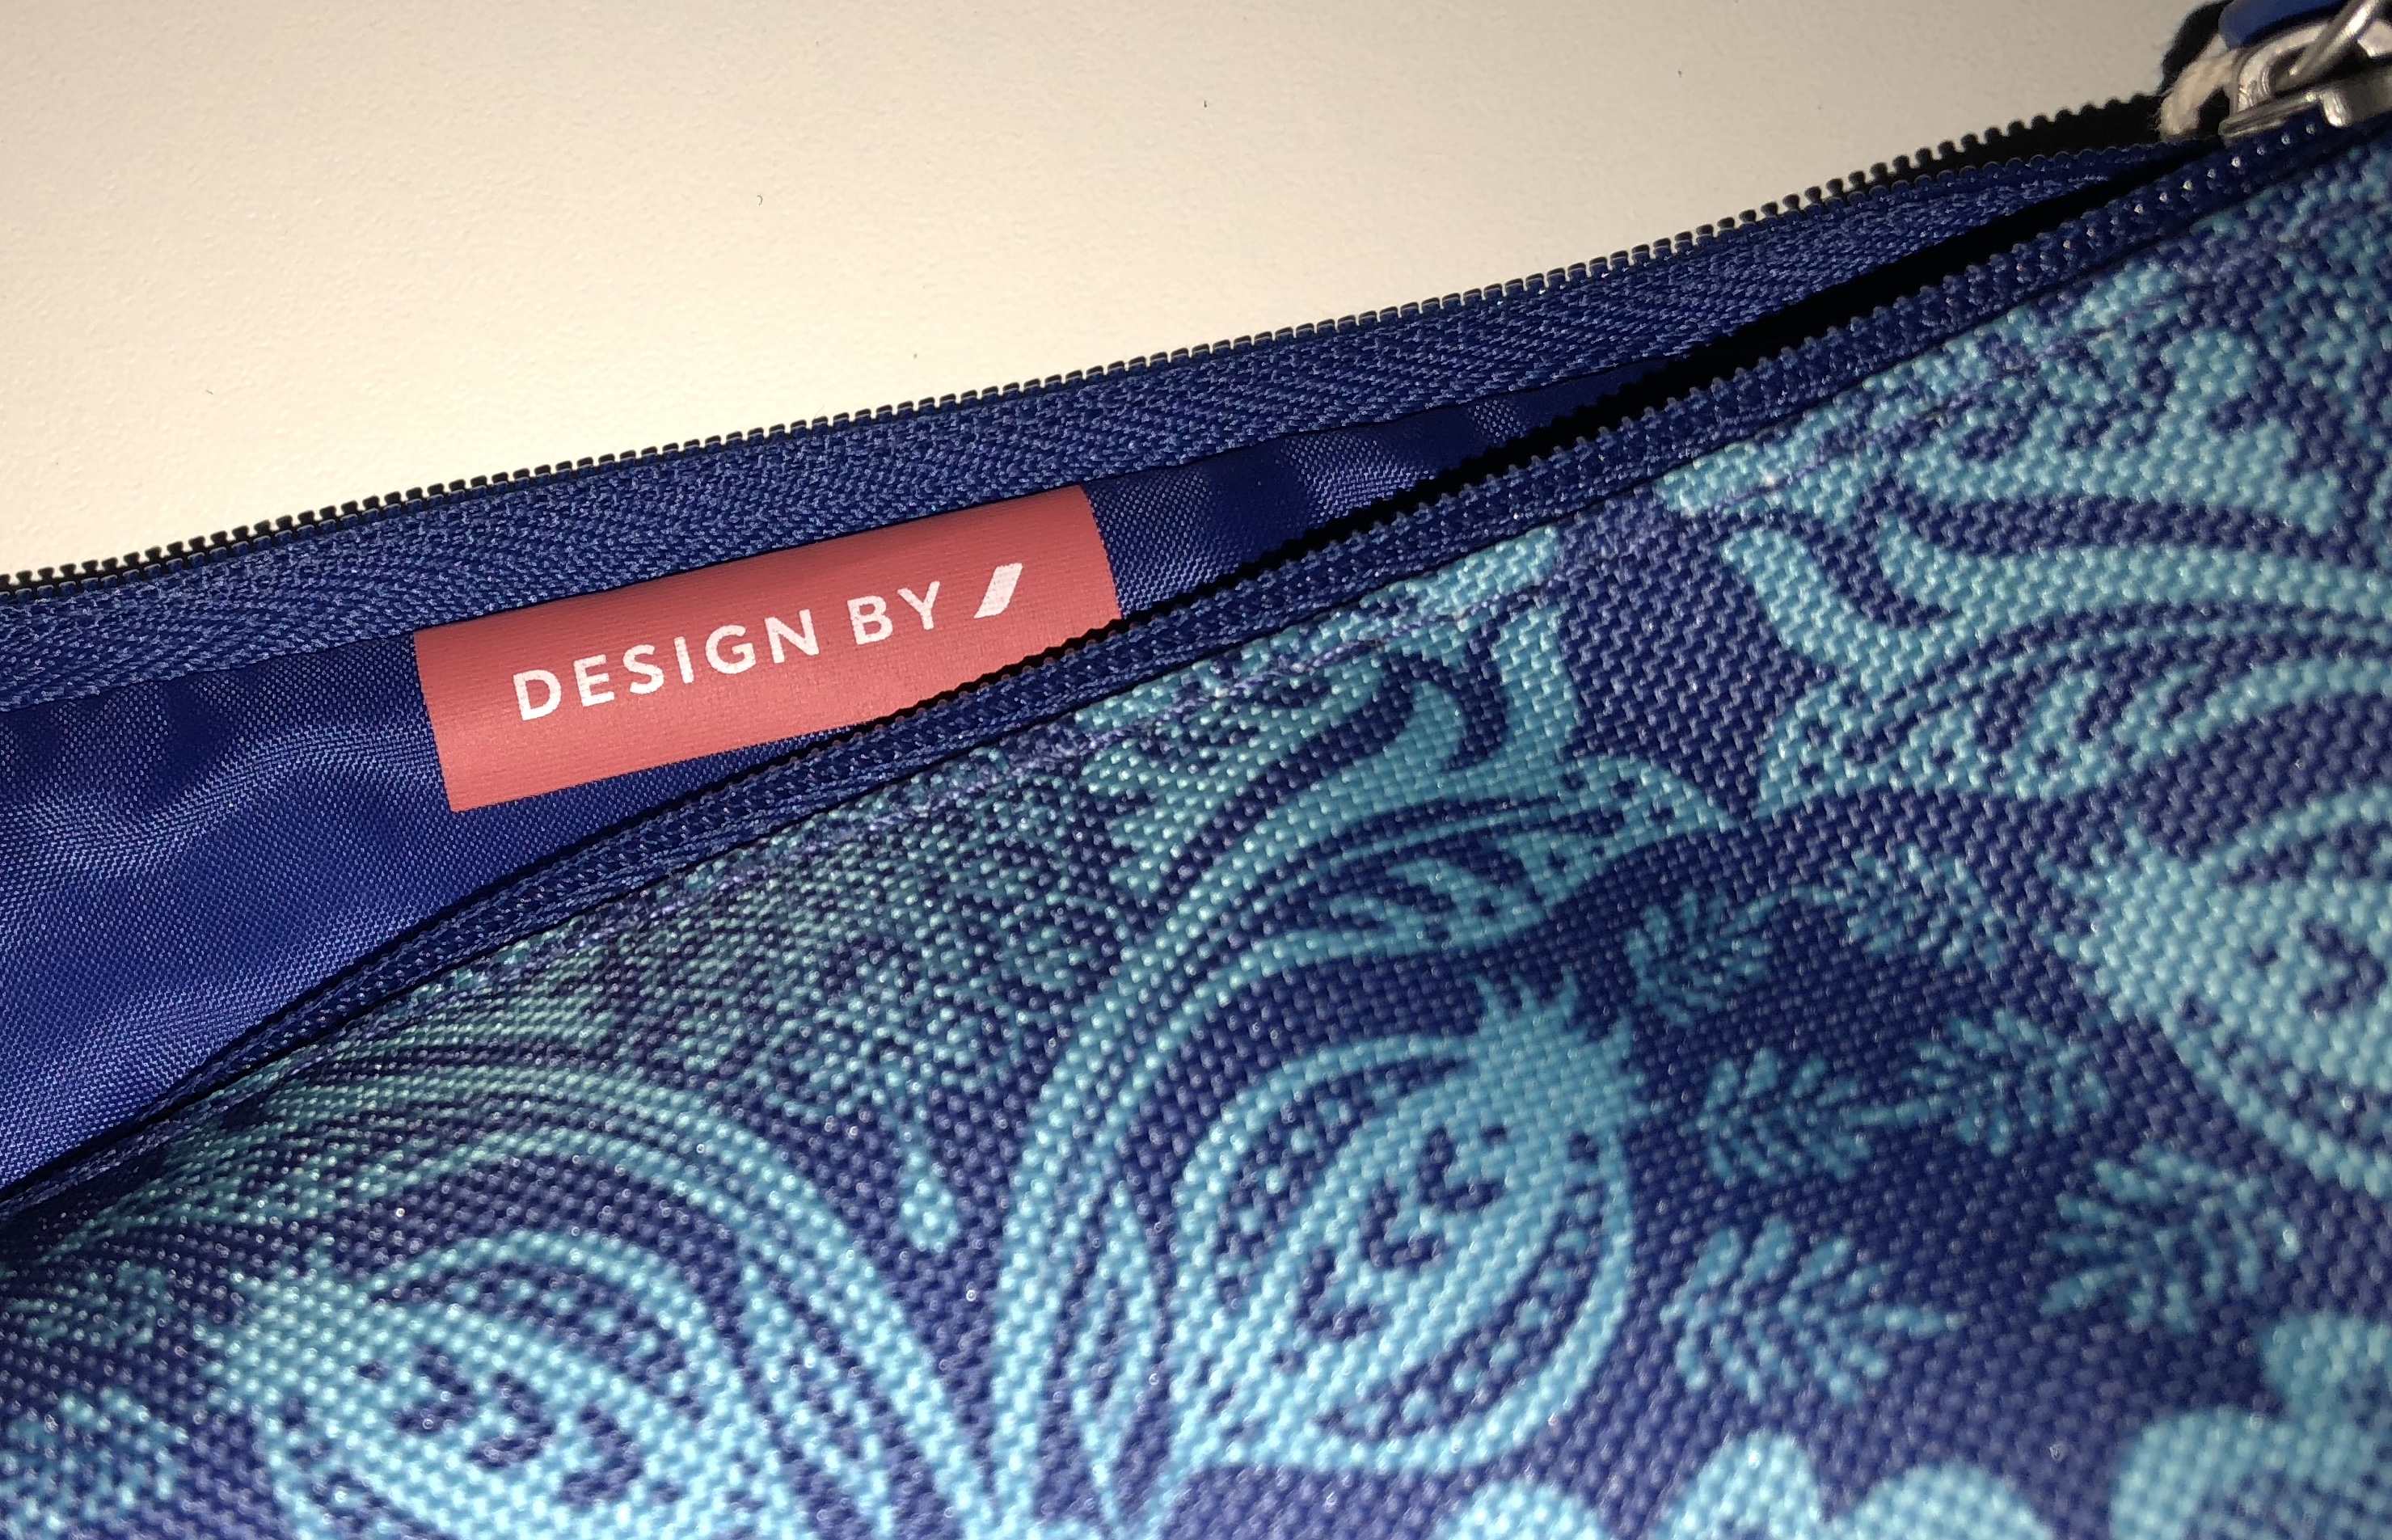 texte, motif, textile, Motif (stylisme), point, sac, bleu, tissu, intérieur